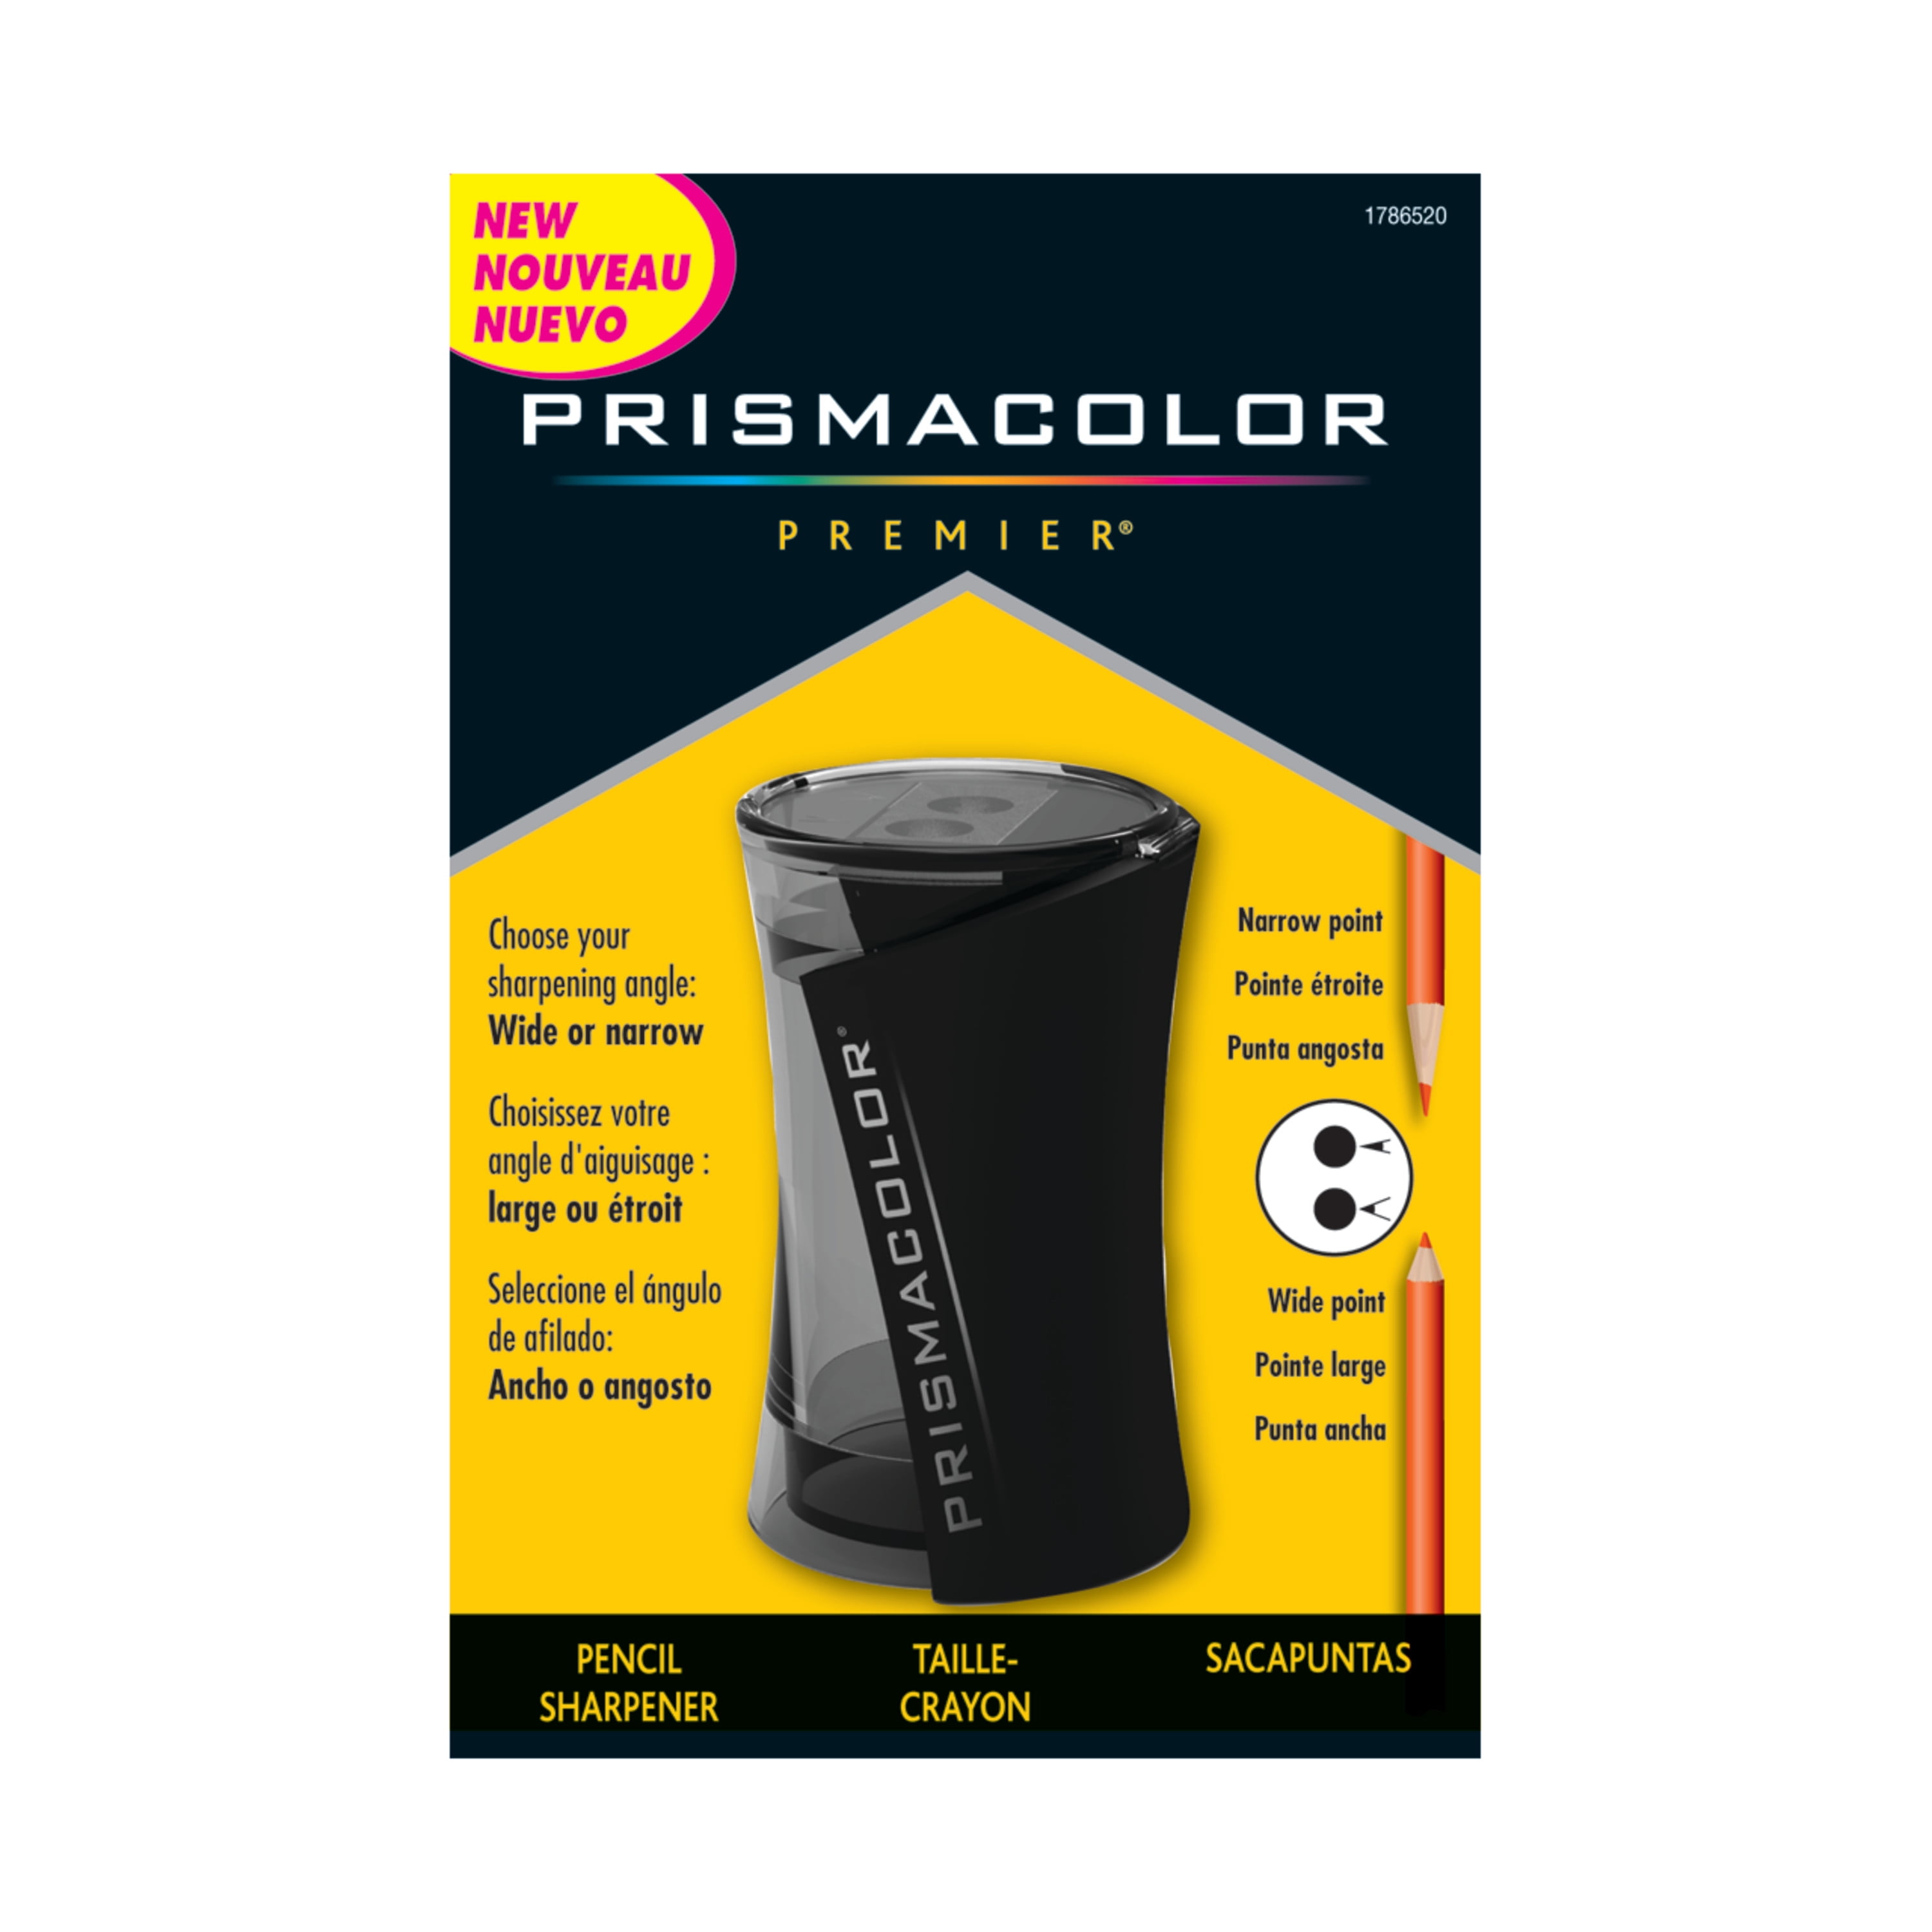 How to Sharpen Prismacolor Pencils - FeltMagnet